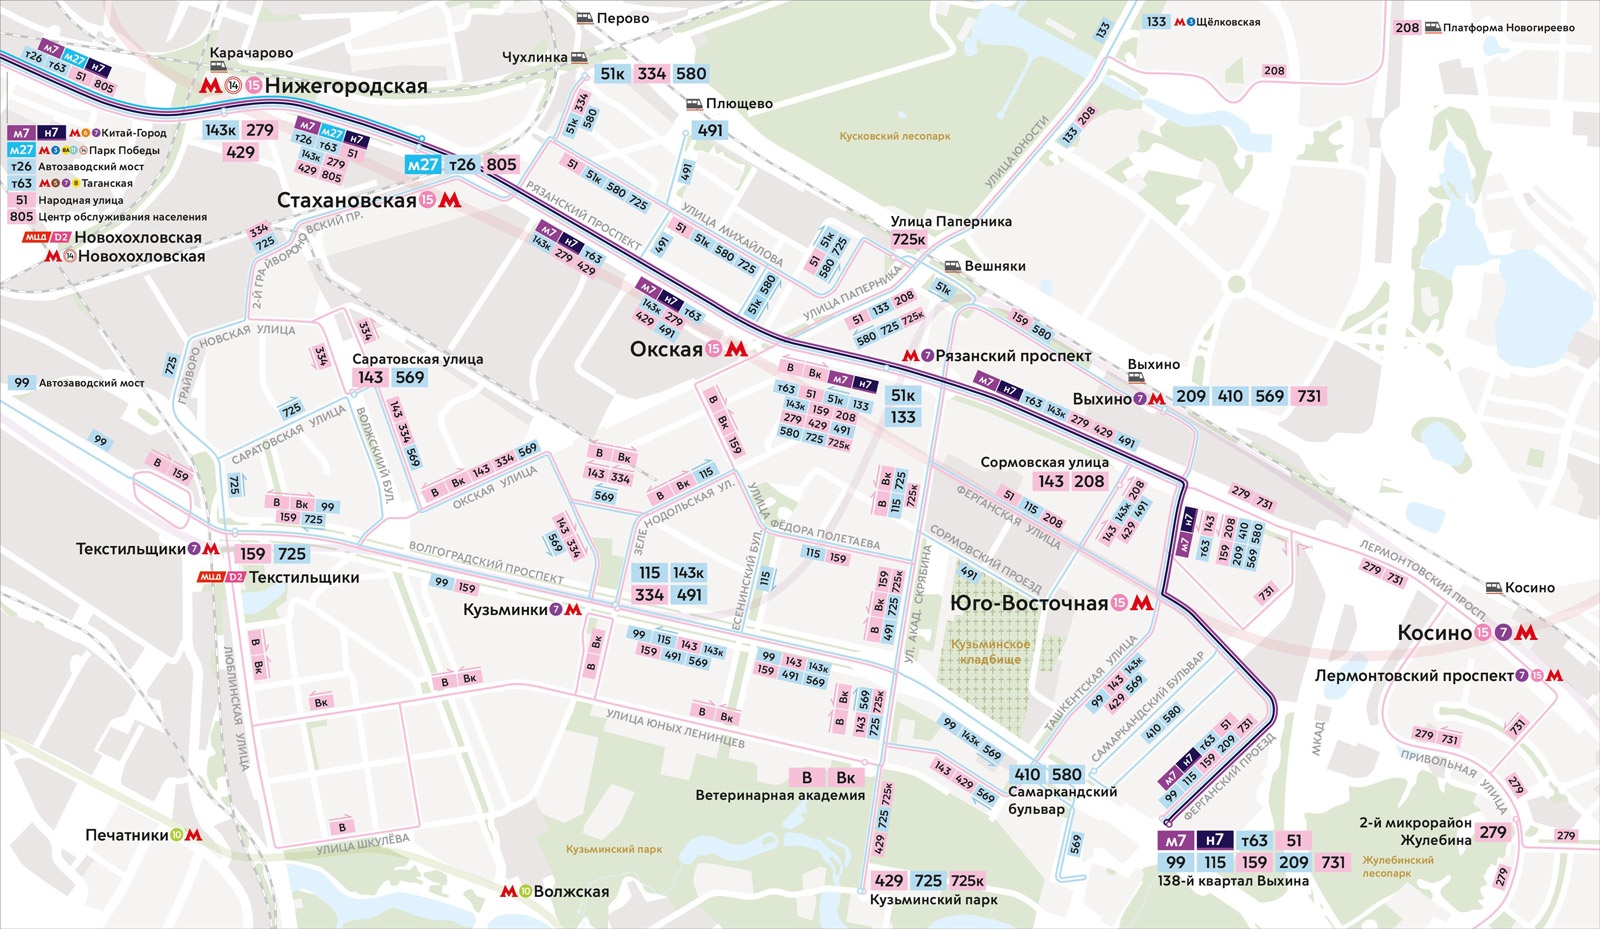 Остановки автобуса м7. Карта маршрута автобуса. Автобусные остановки на карте. Автобусные маршруты Москвы на карте. Выхино на карте.